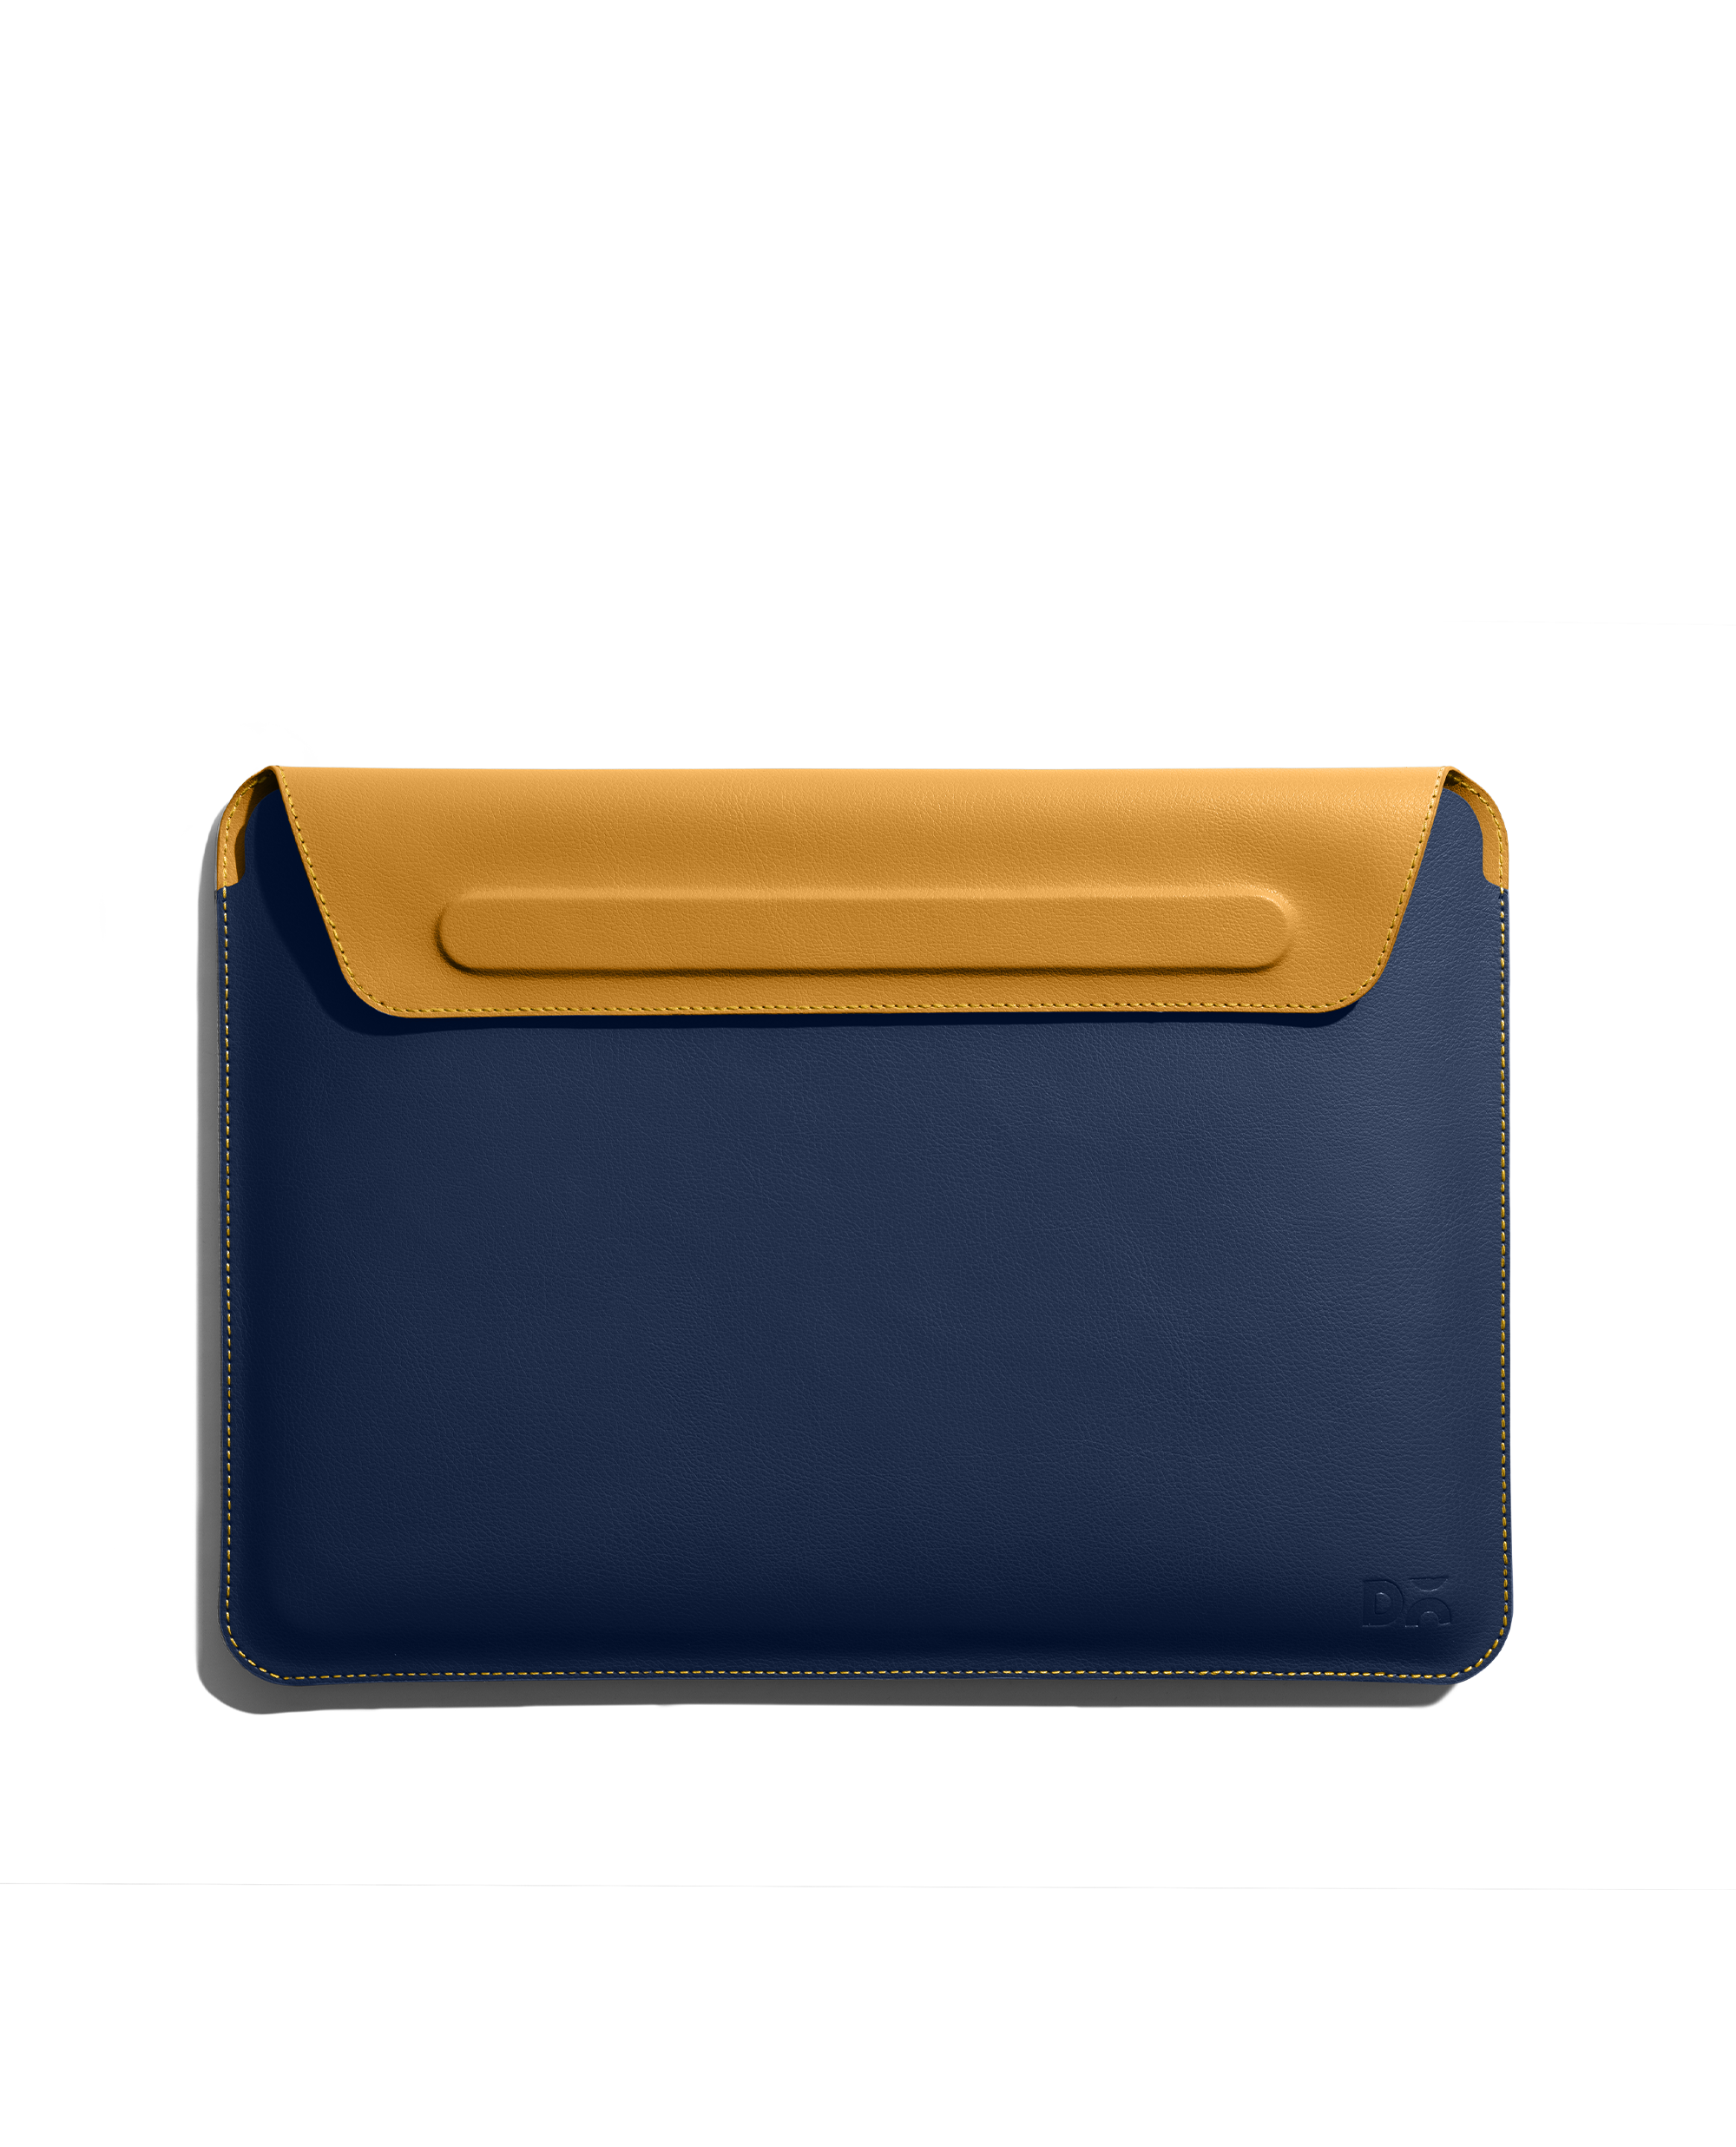 Metion Laptop Bag Macbook Air 13 inch Bags for Macbook Pro 13.3